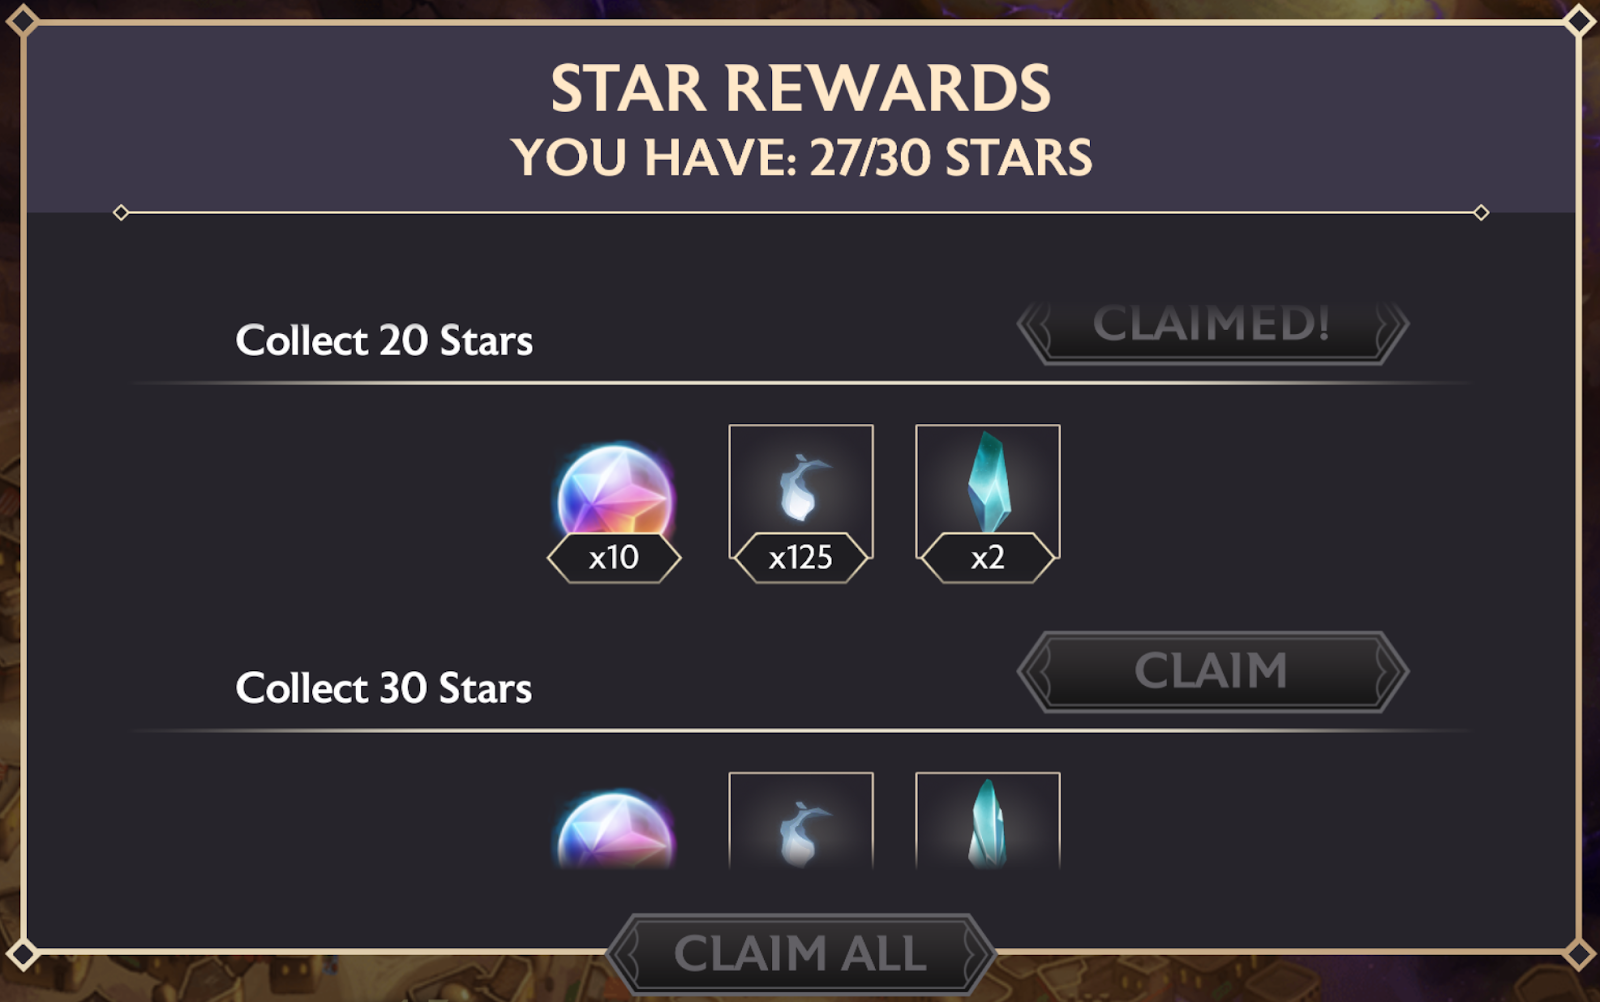 A screenshot of the star rewards pop-up